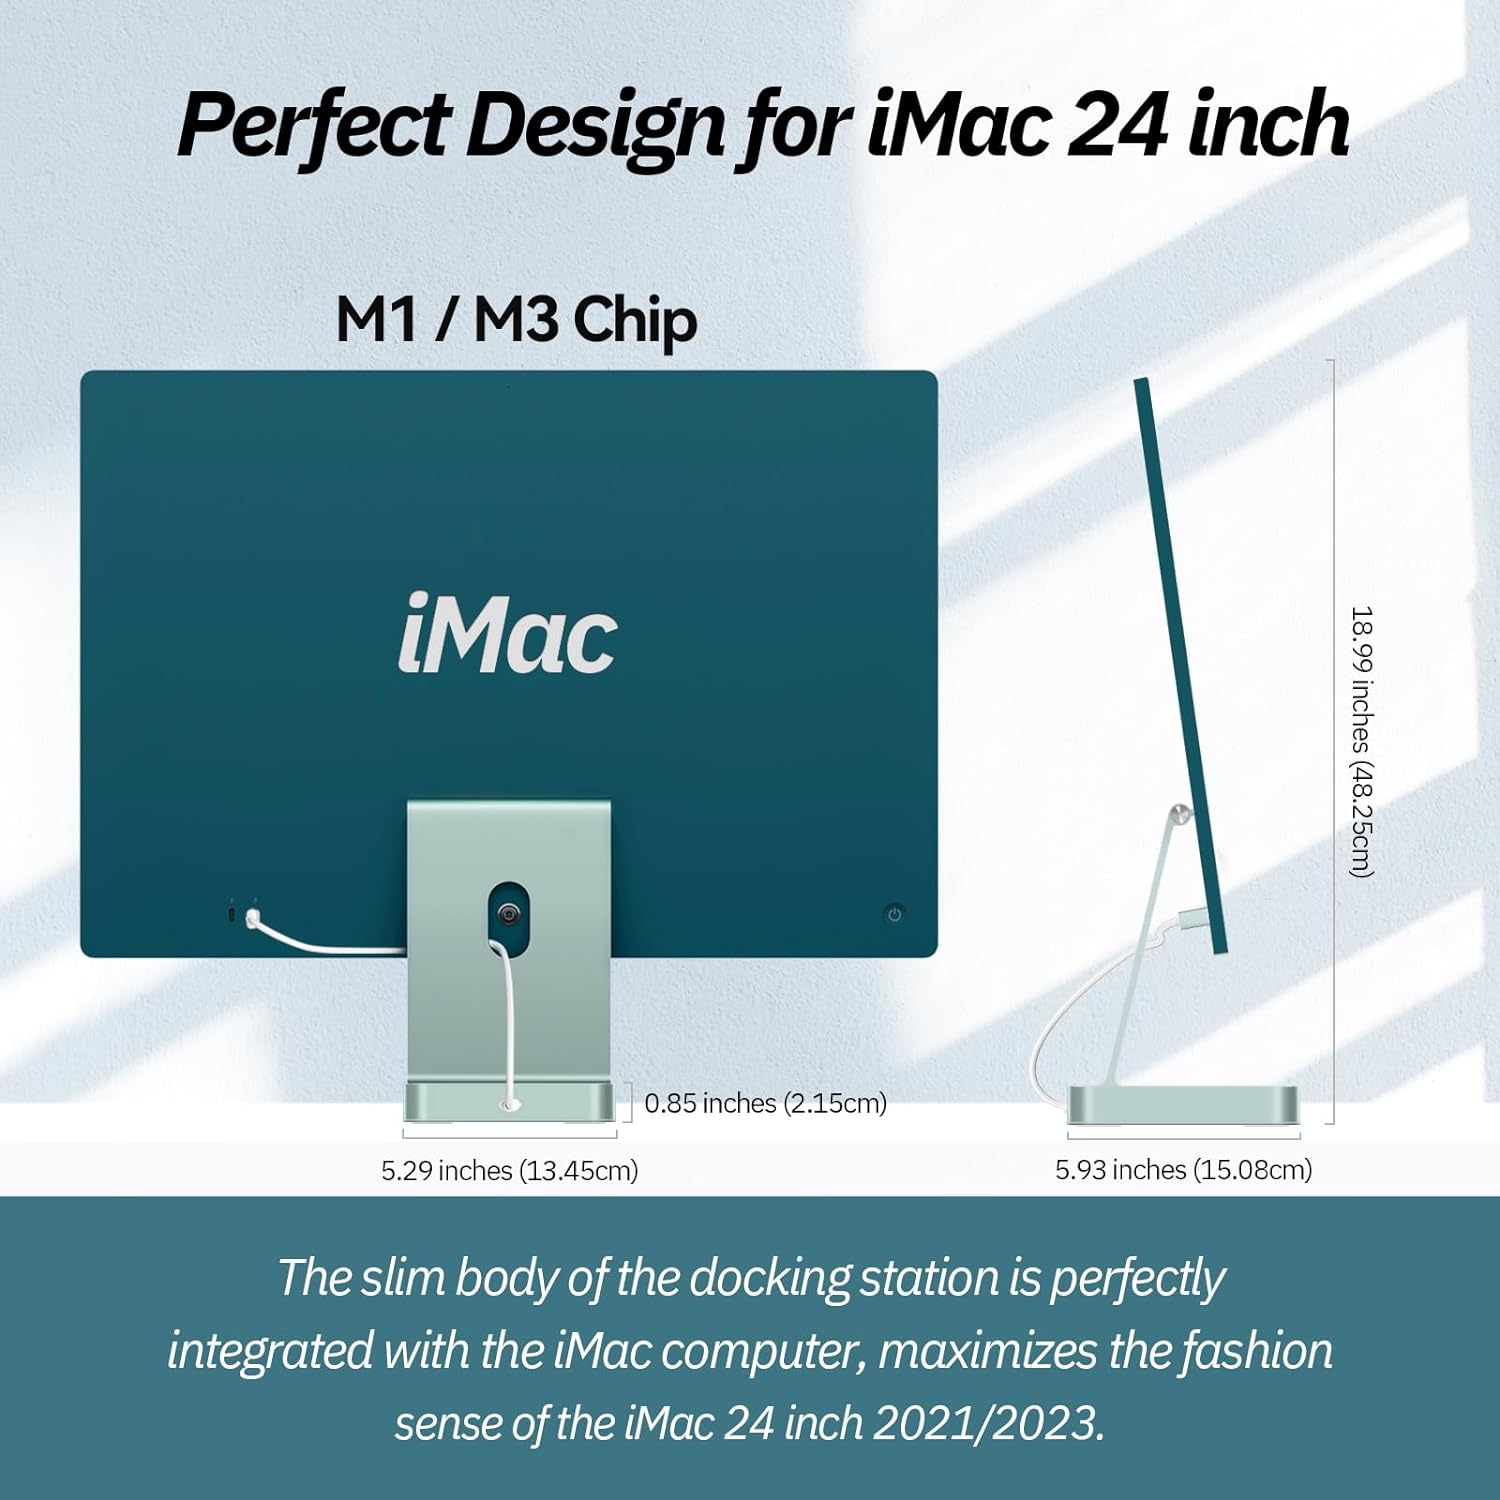 10Gbps USB C Docking Station For 24" iMac M1/M3【Green】|DS802-G